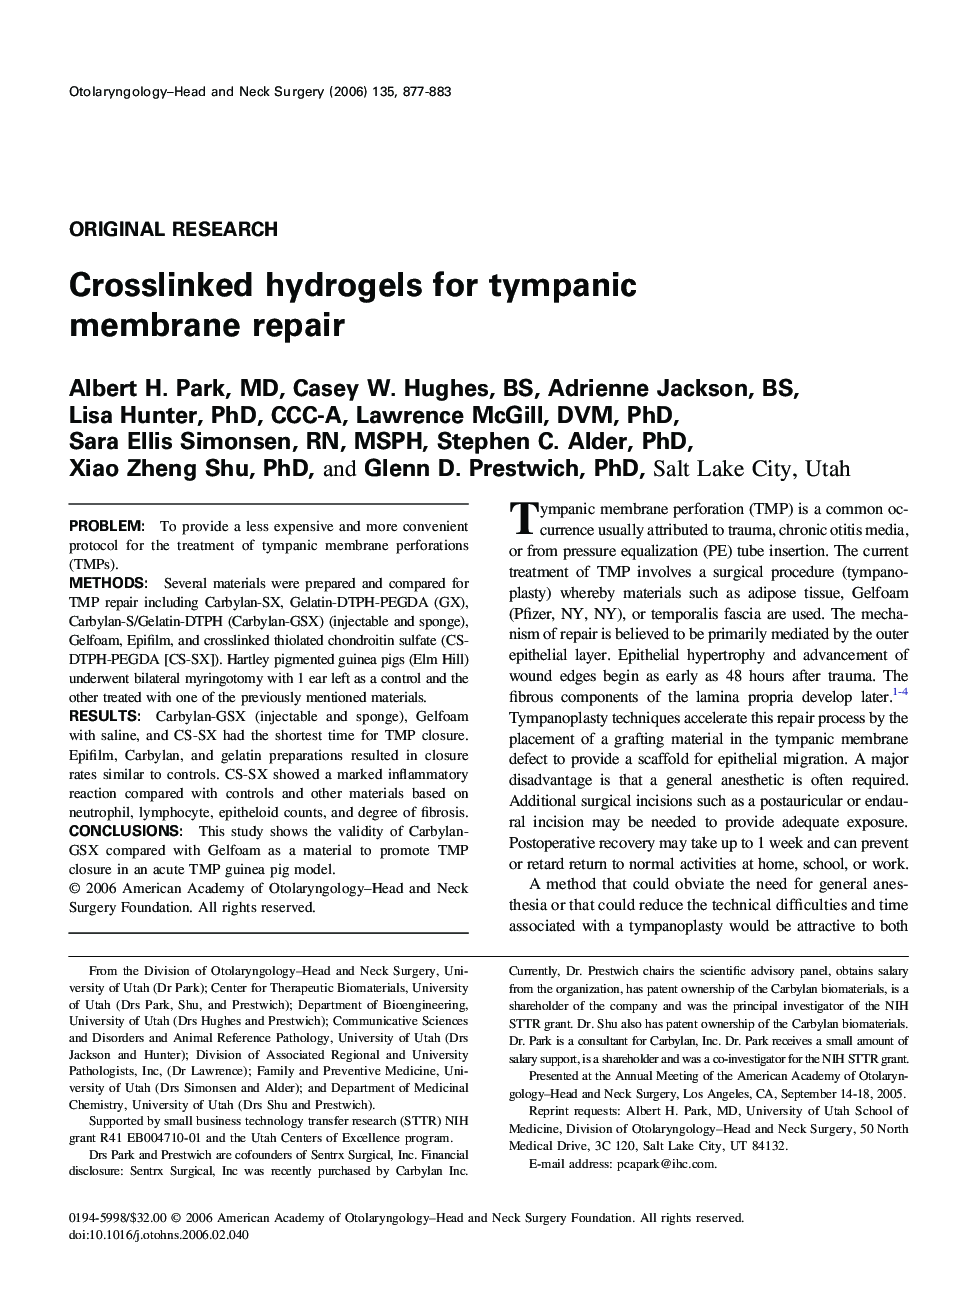 Crosslinked hydrogels for tympanic membrane repair